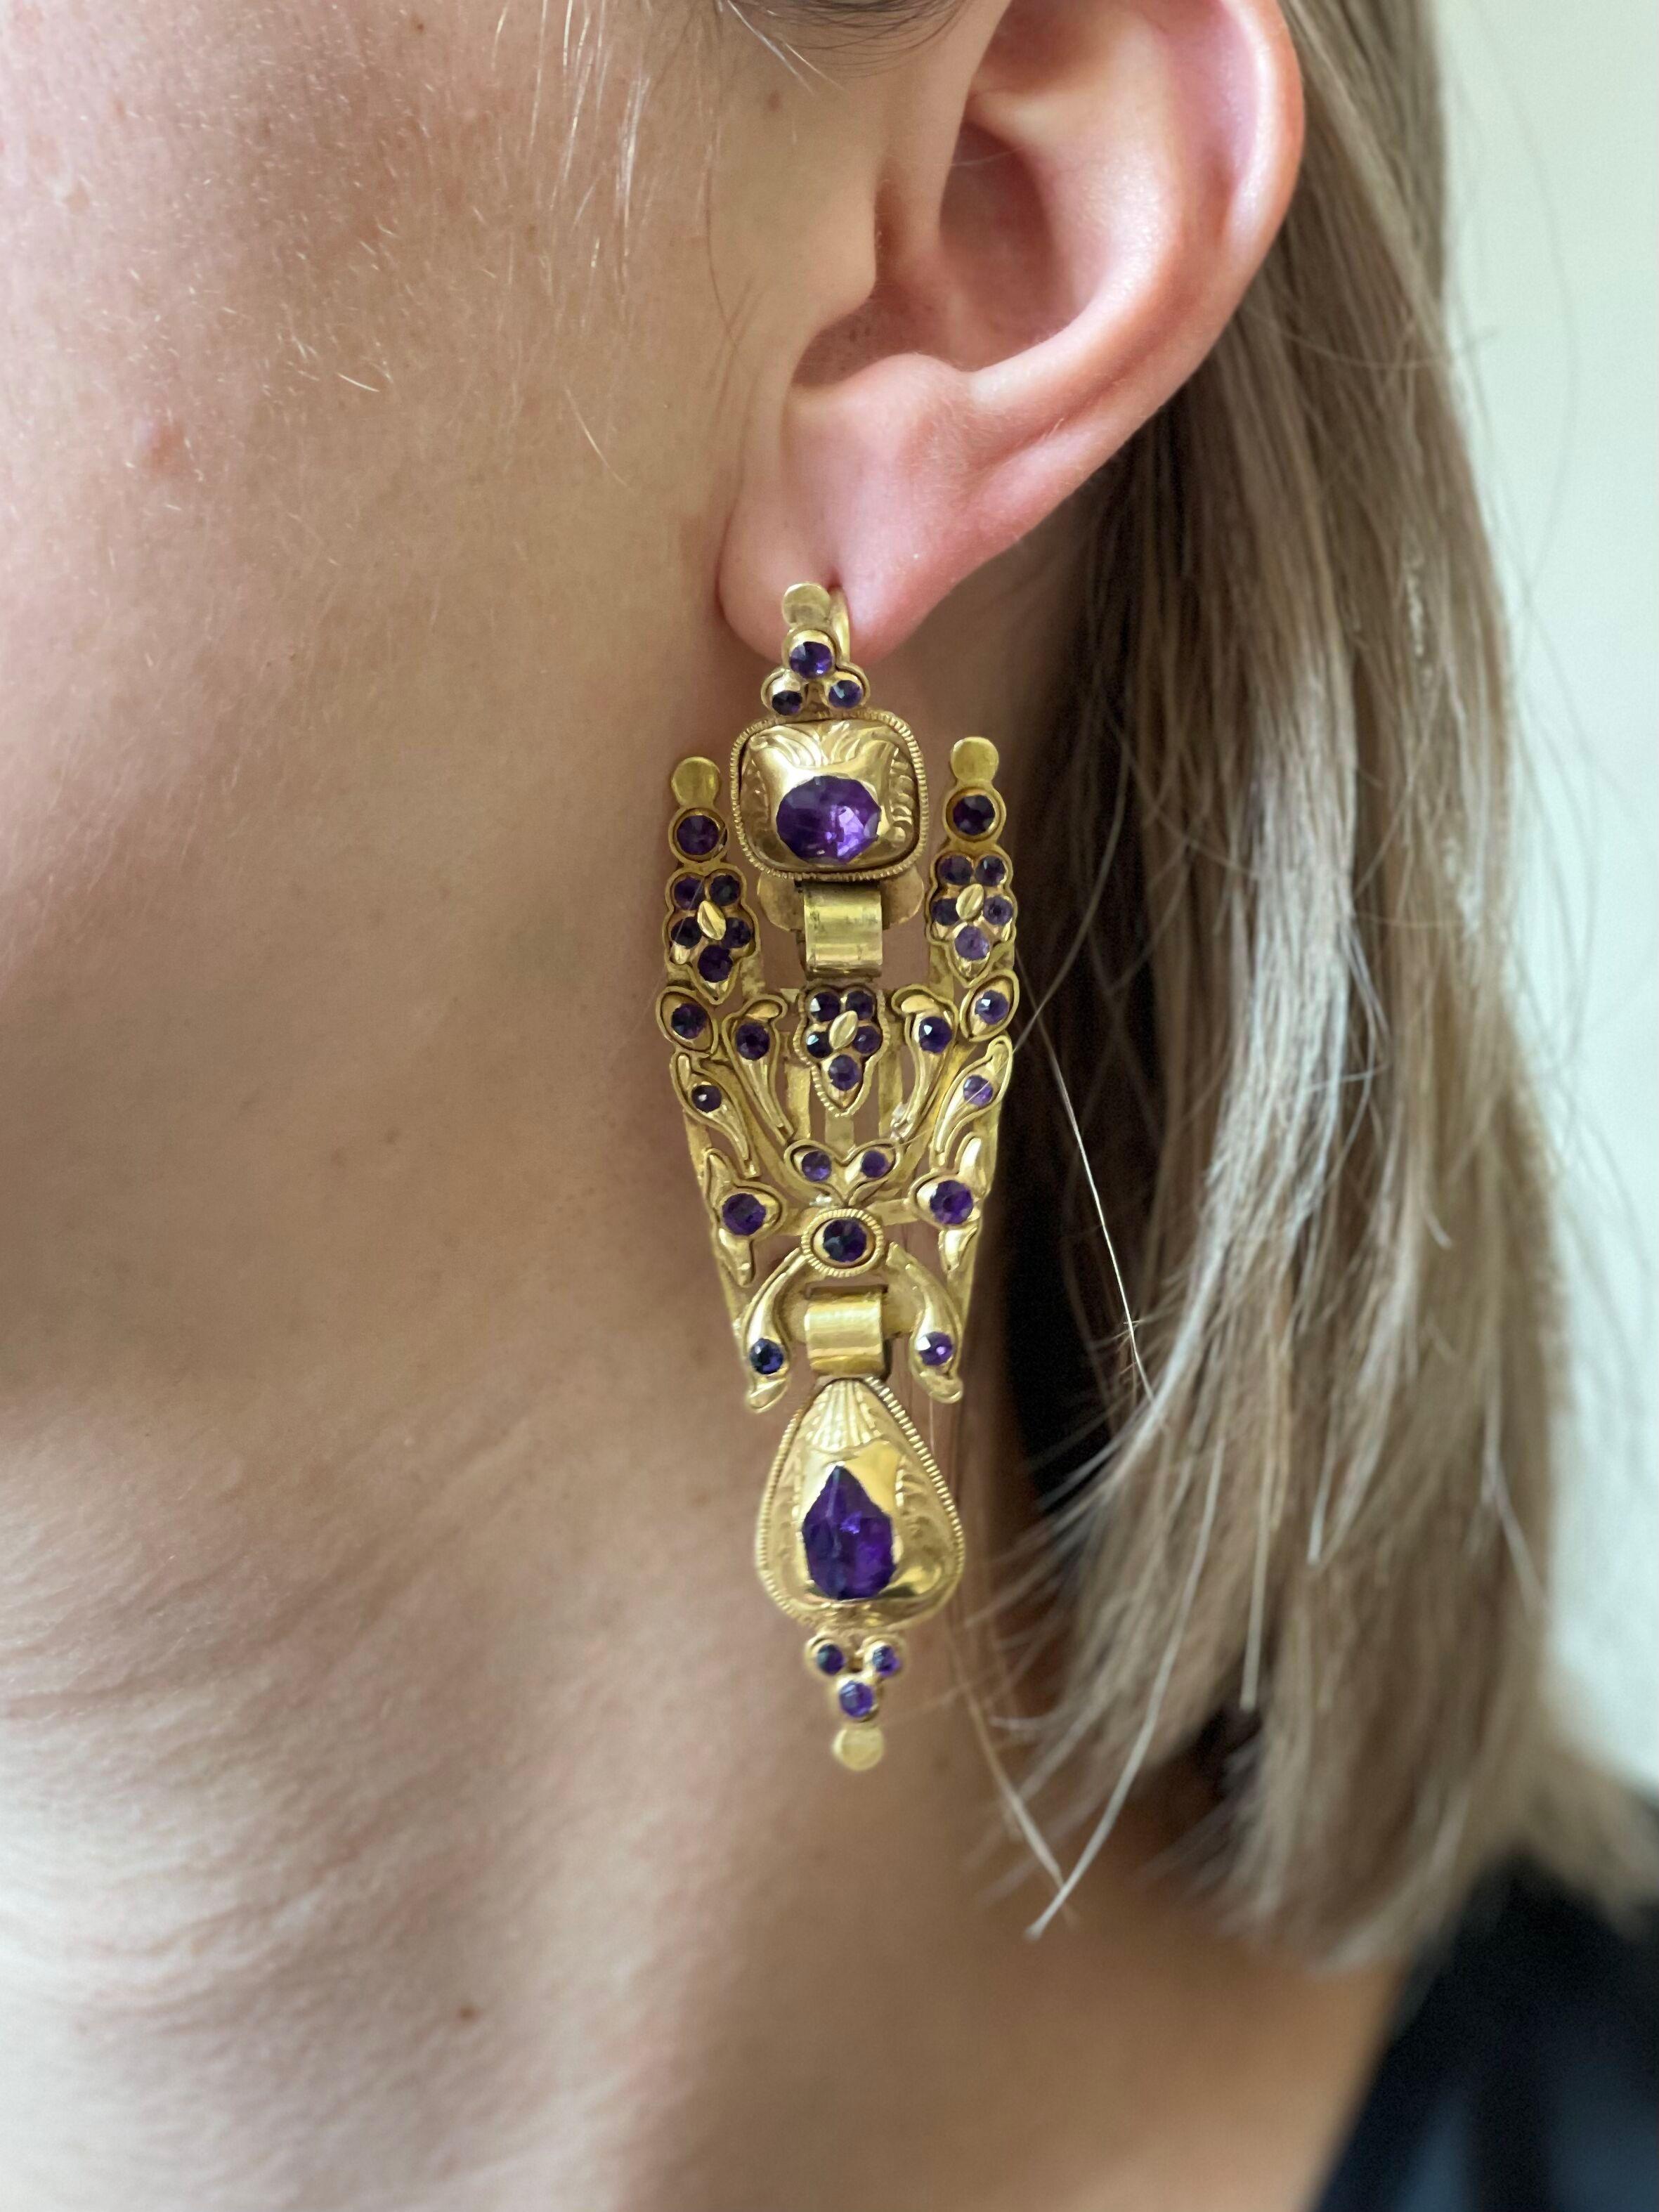 Pair of antique Iberian 14k gold earrings, set with amethyst gemstones. Earrings are 3 5/8